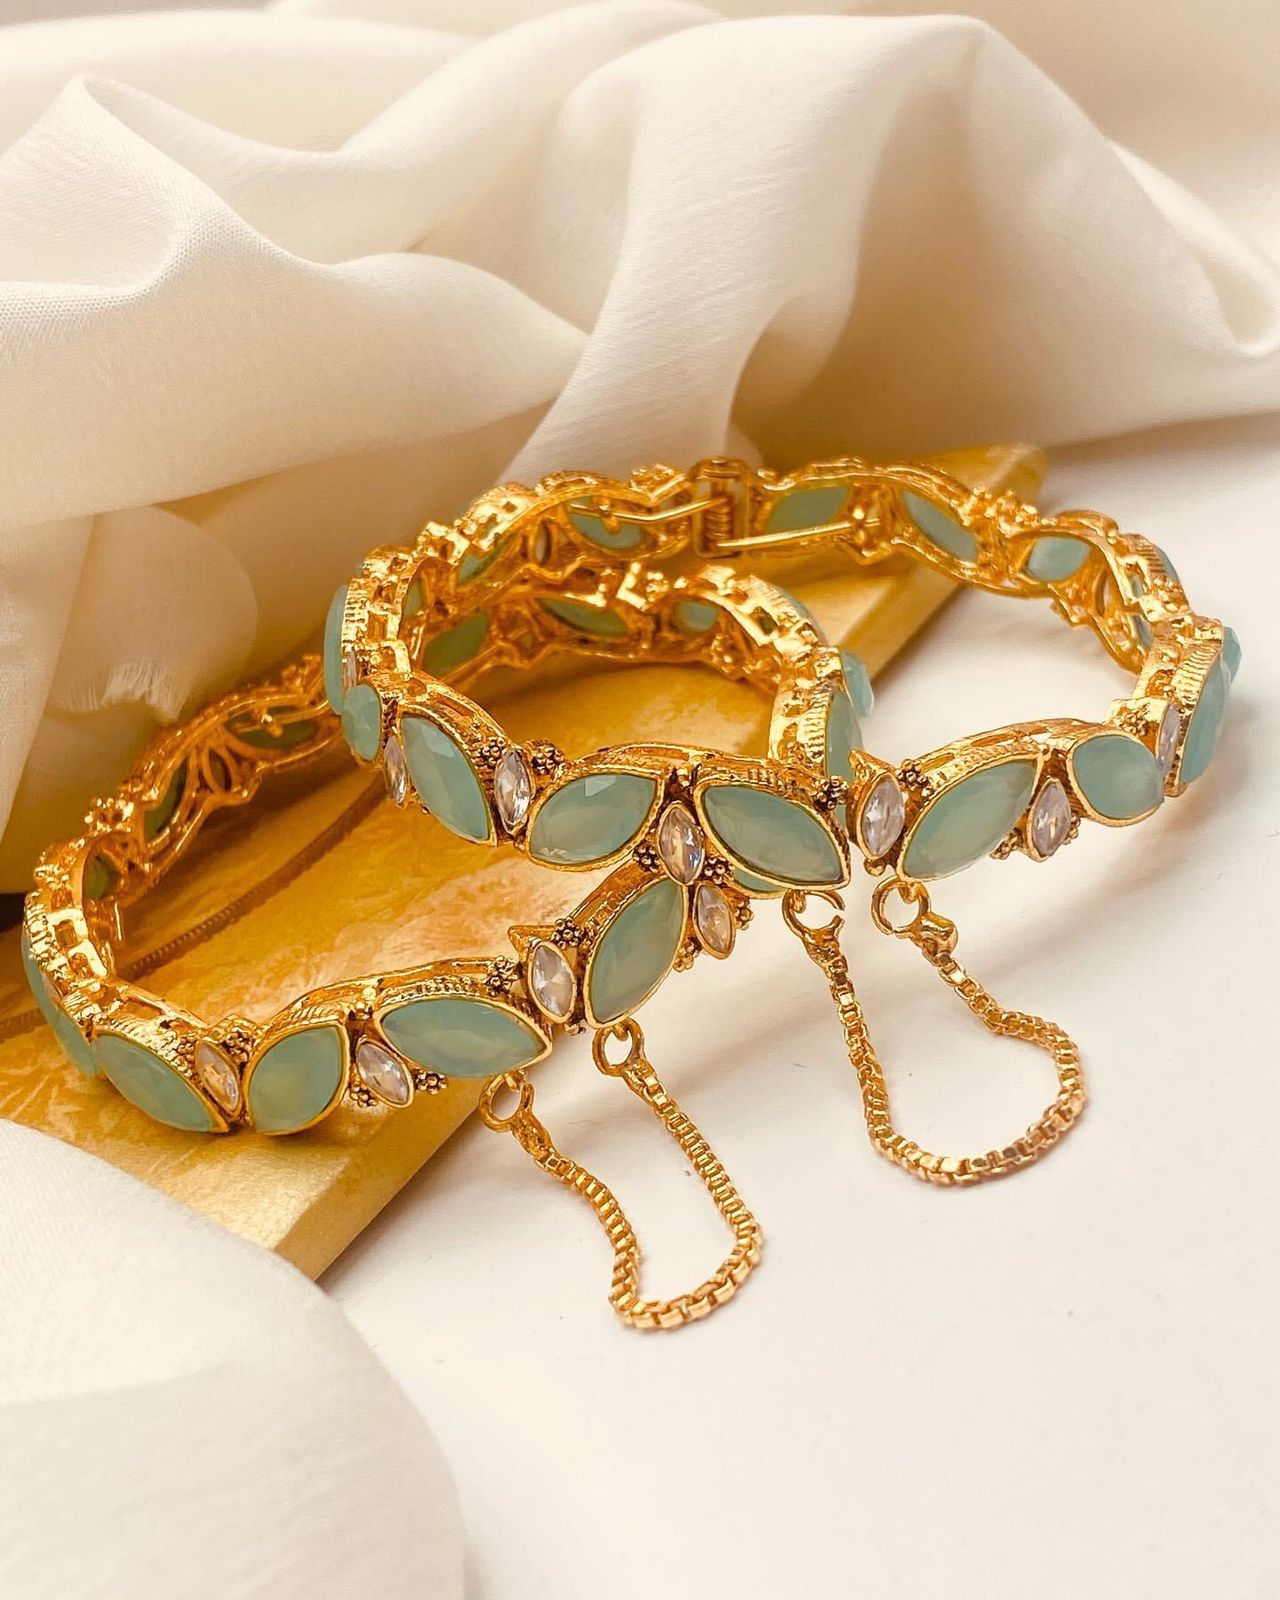 Gold Kangan Design by Nayab Jewellery